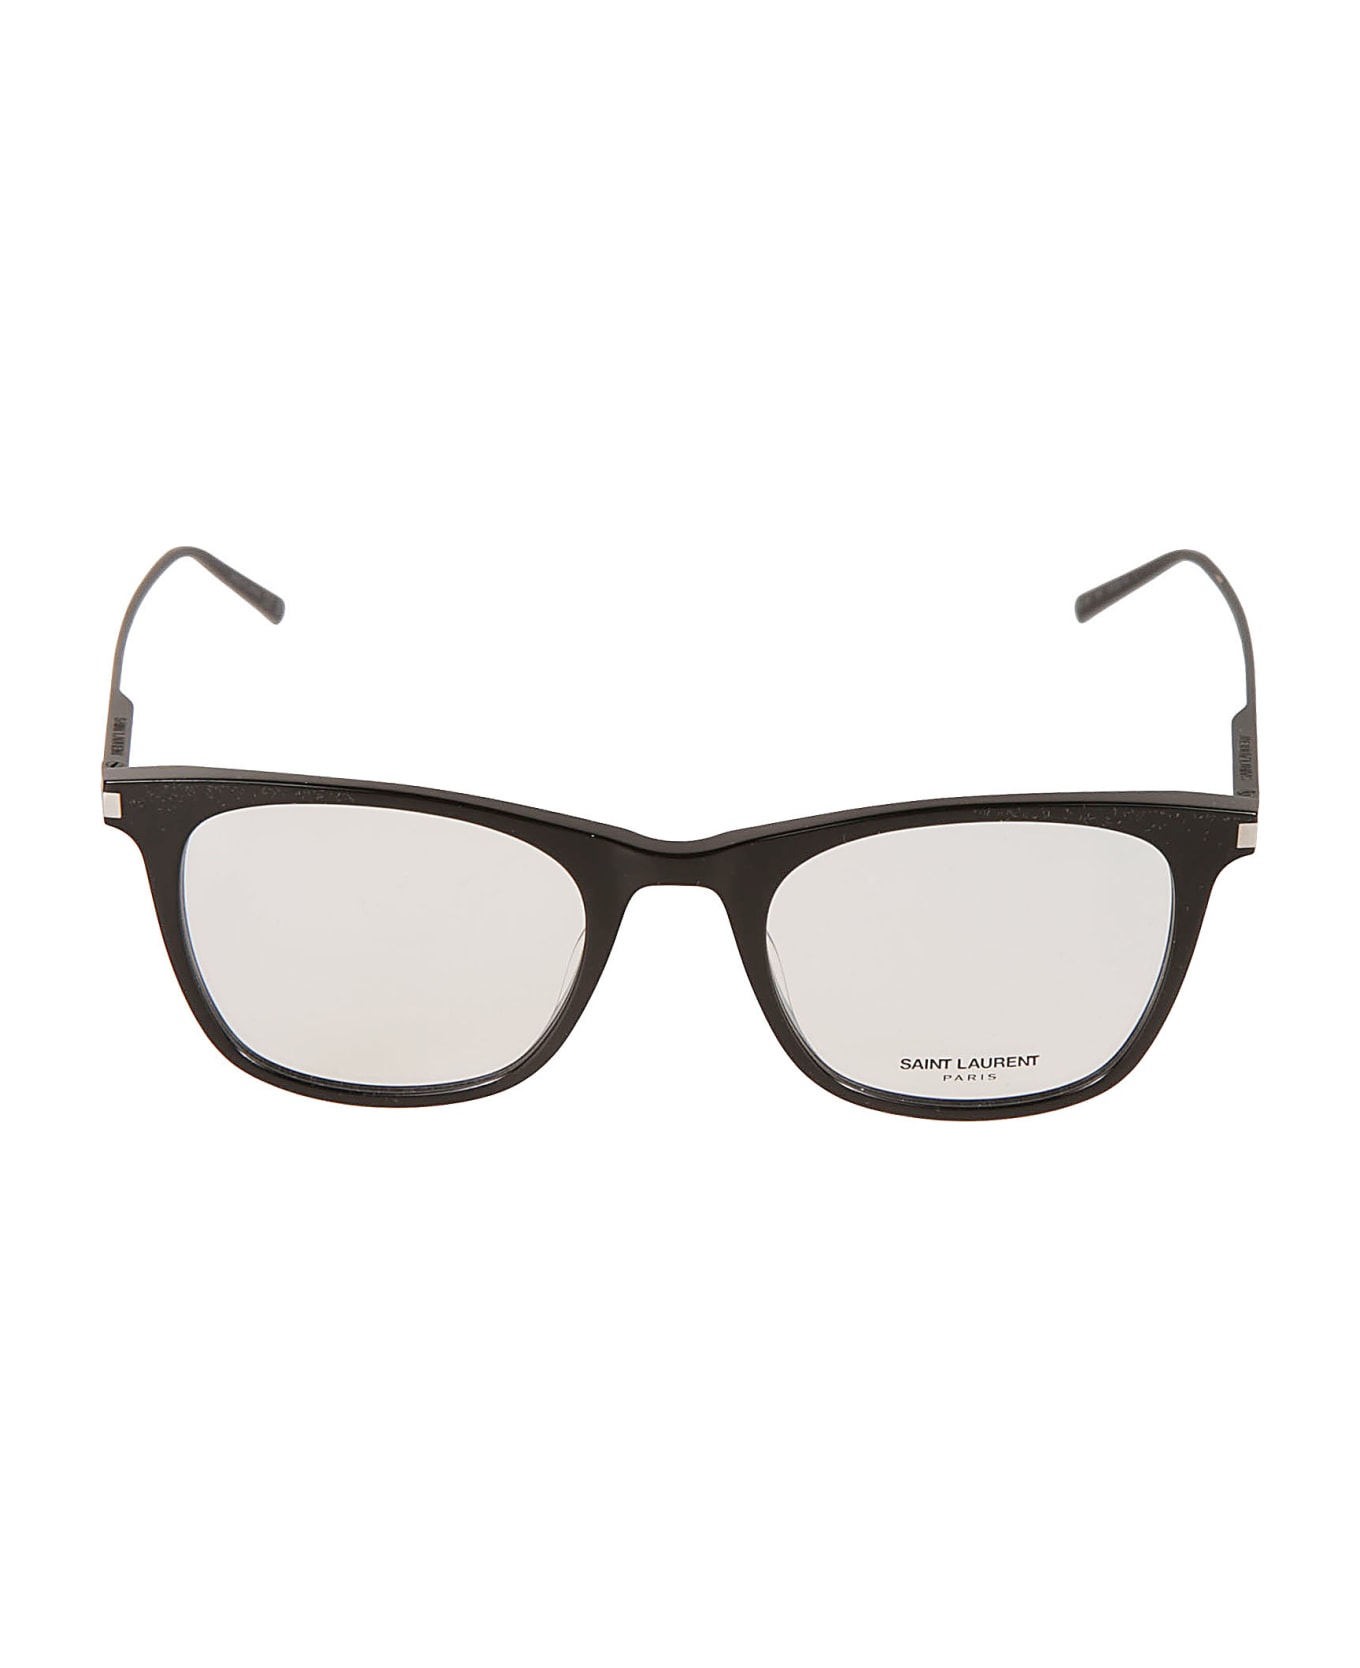 Saint Laurent Eyewear Logo Wayfarer Frame - Black アイウェア